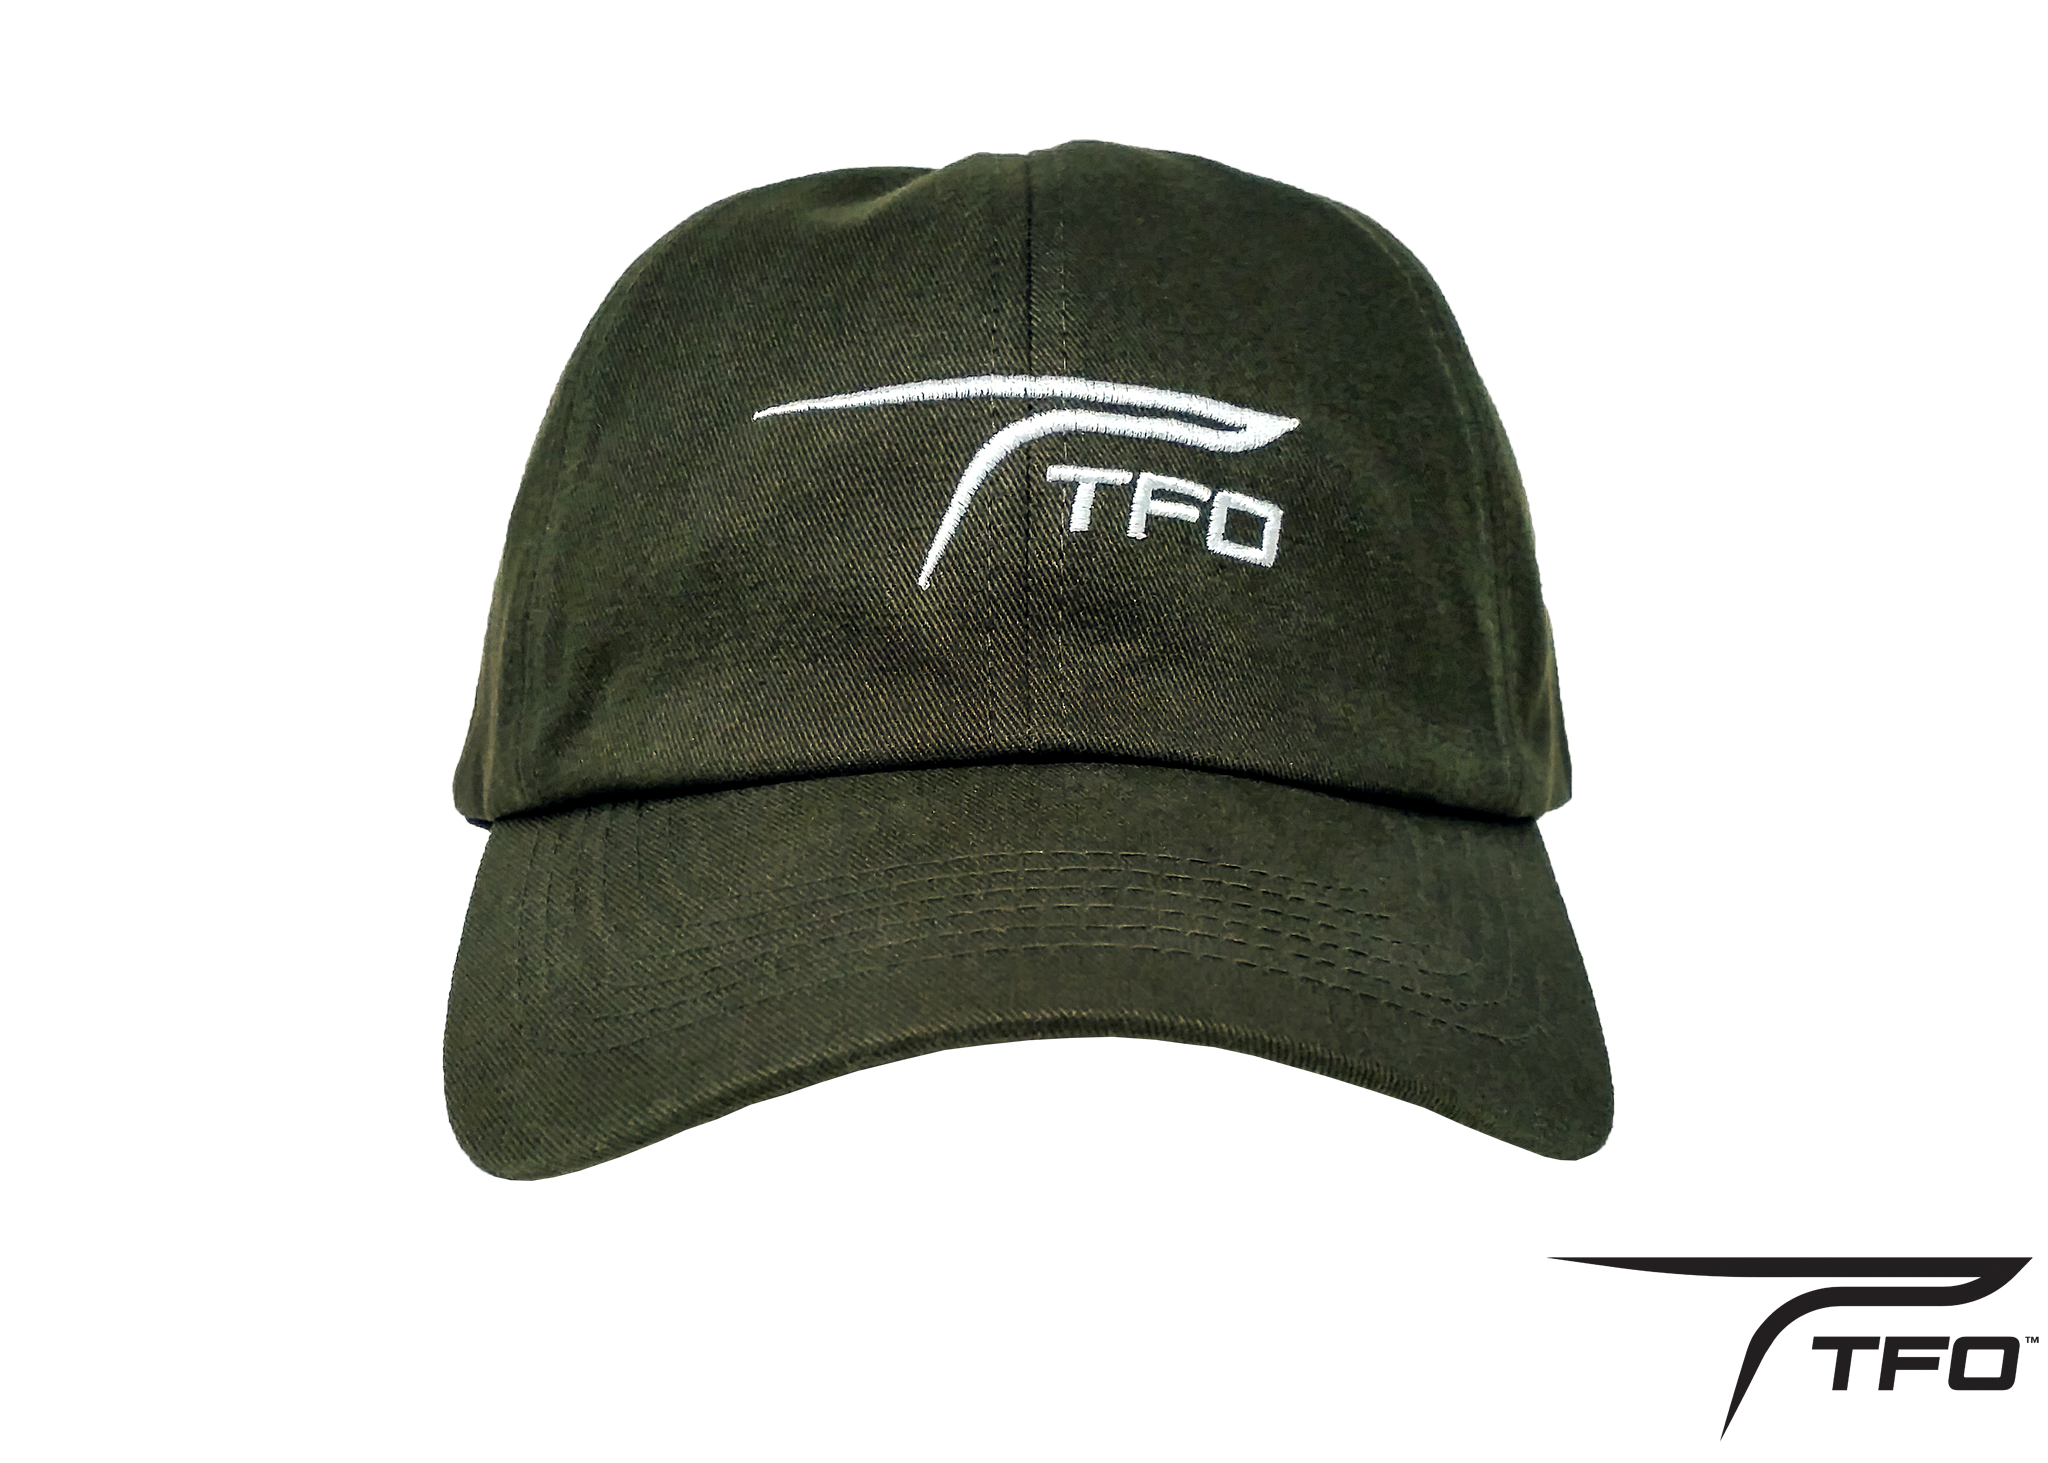 TFO Flyrod Ball Caps, Gear